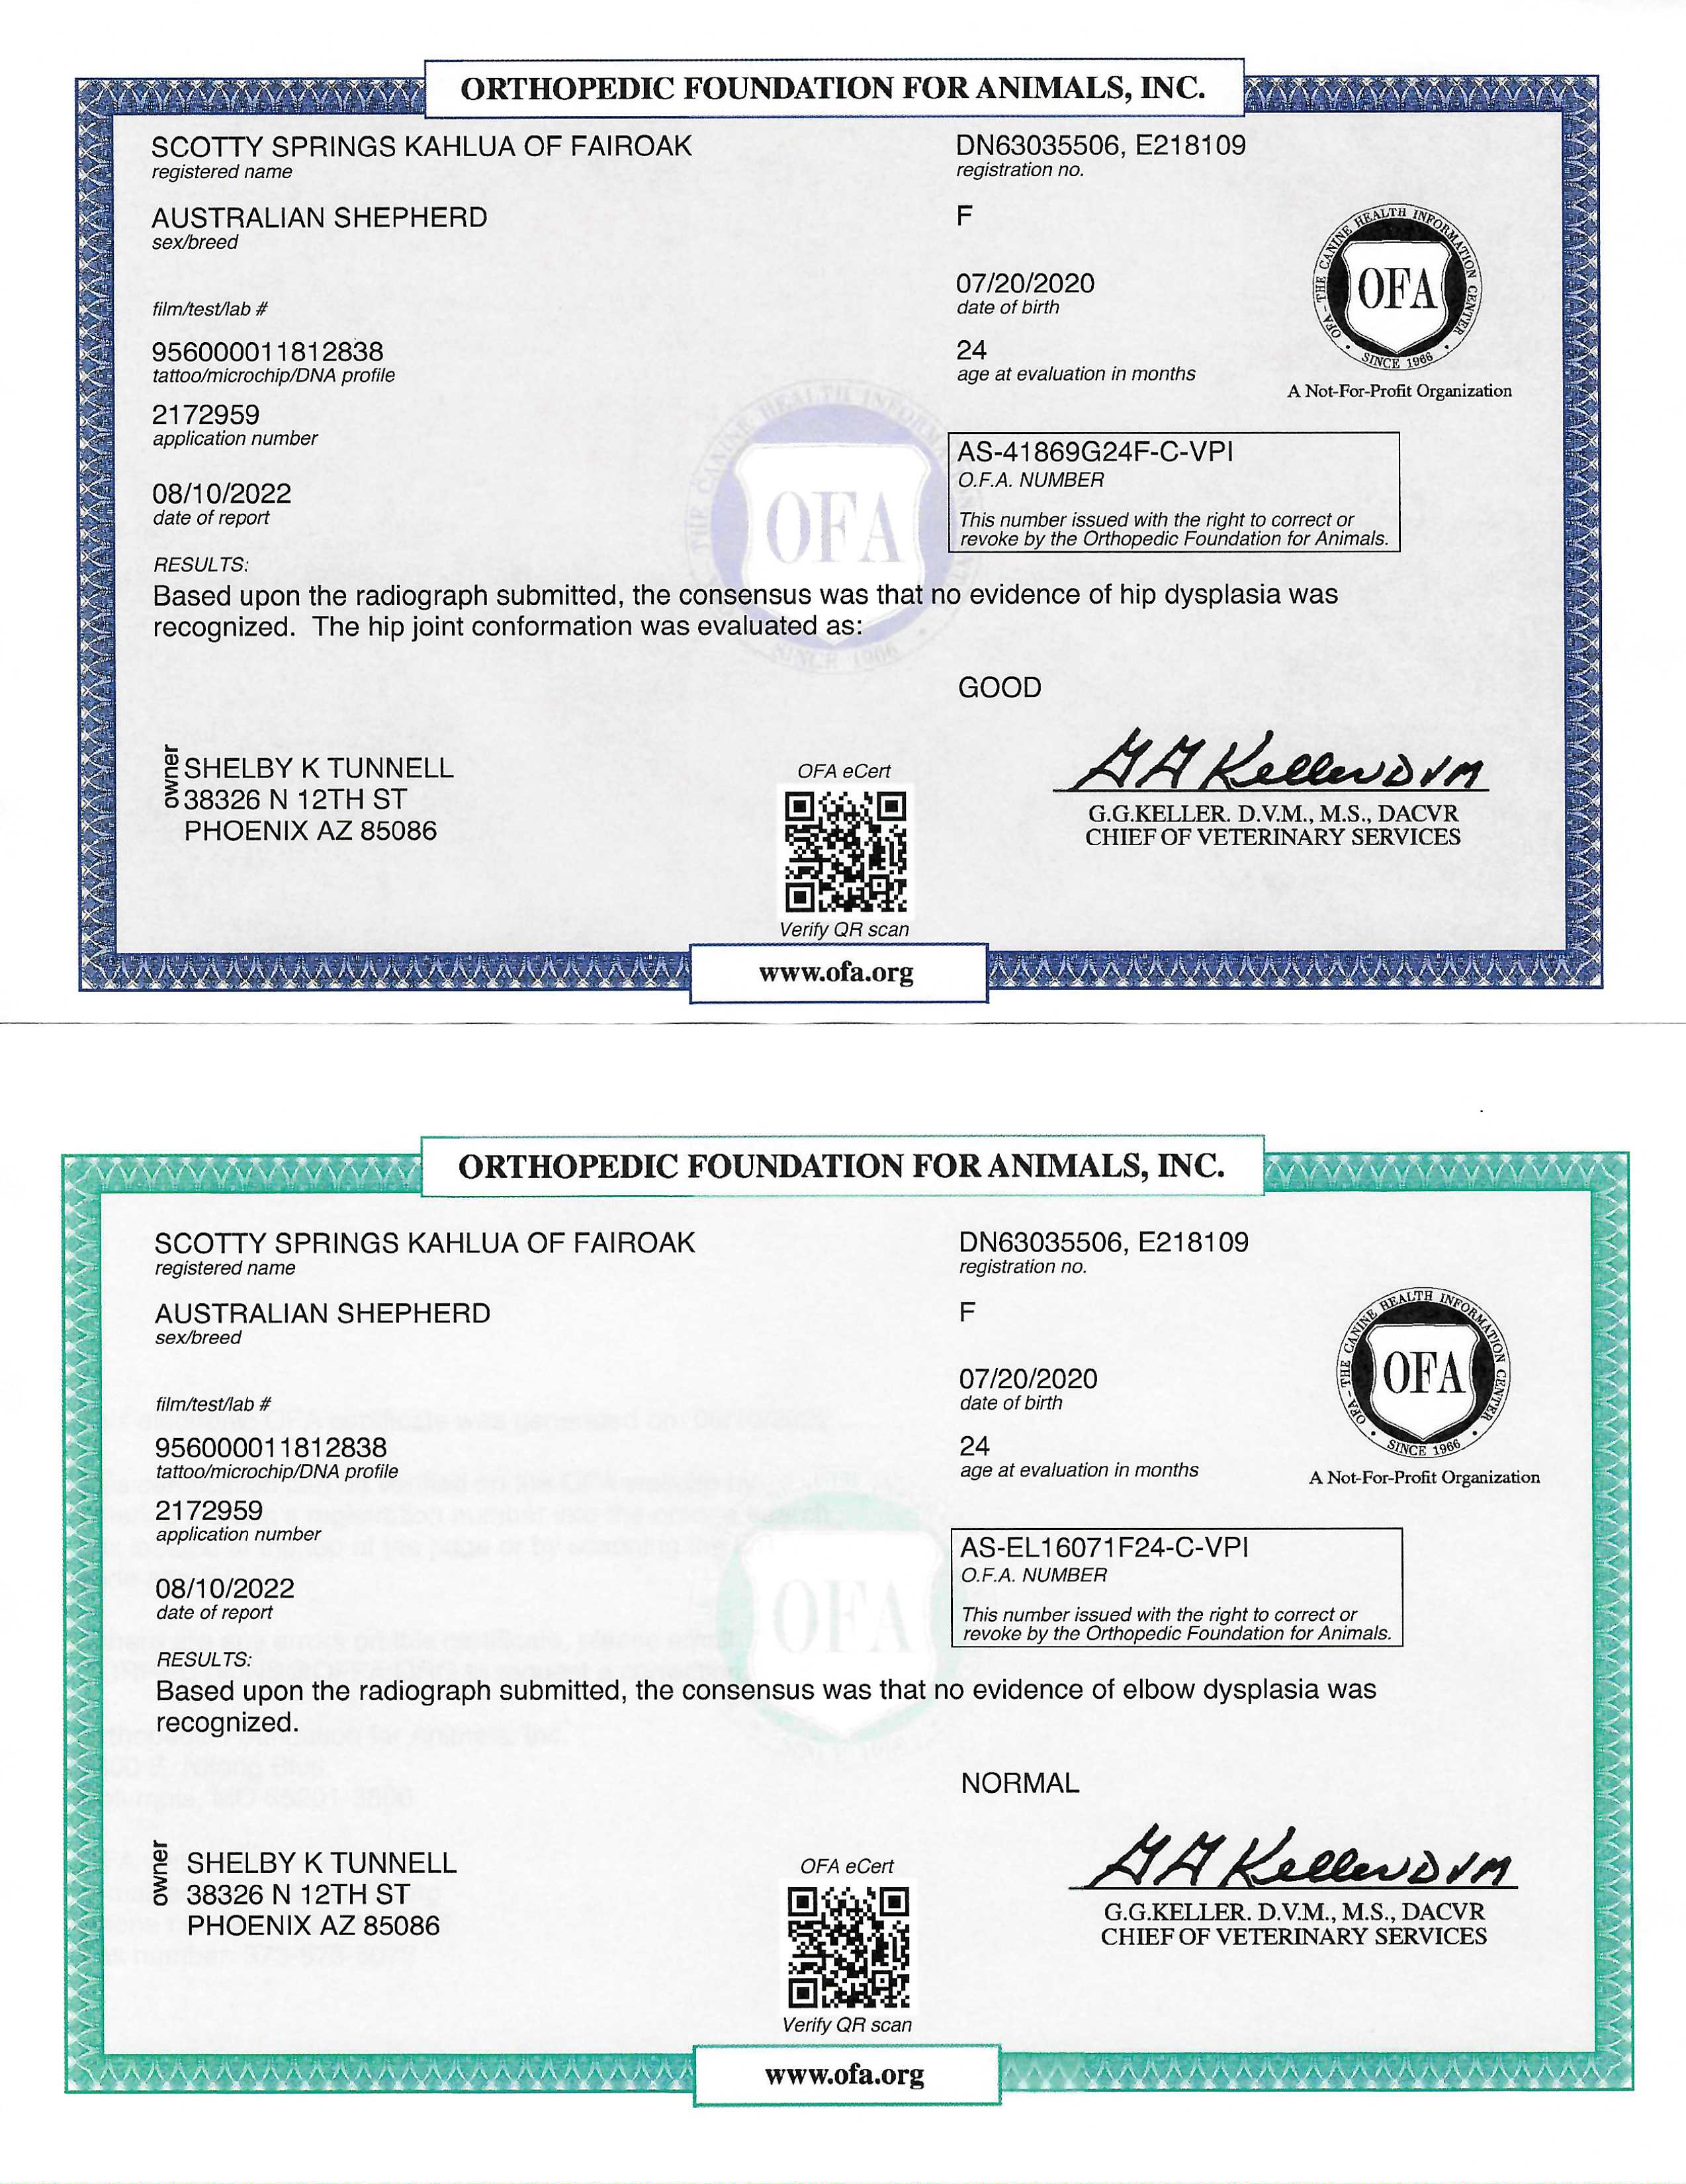 Scotty Springs Kahlua of Fairoak OFA Certificates